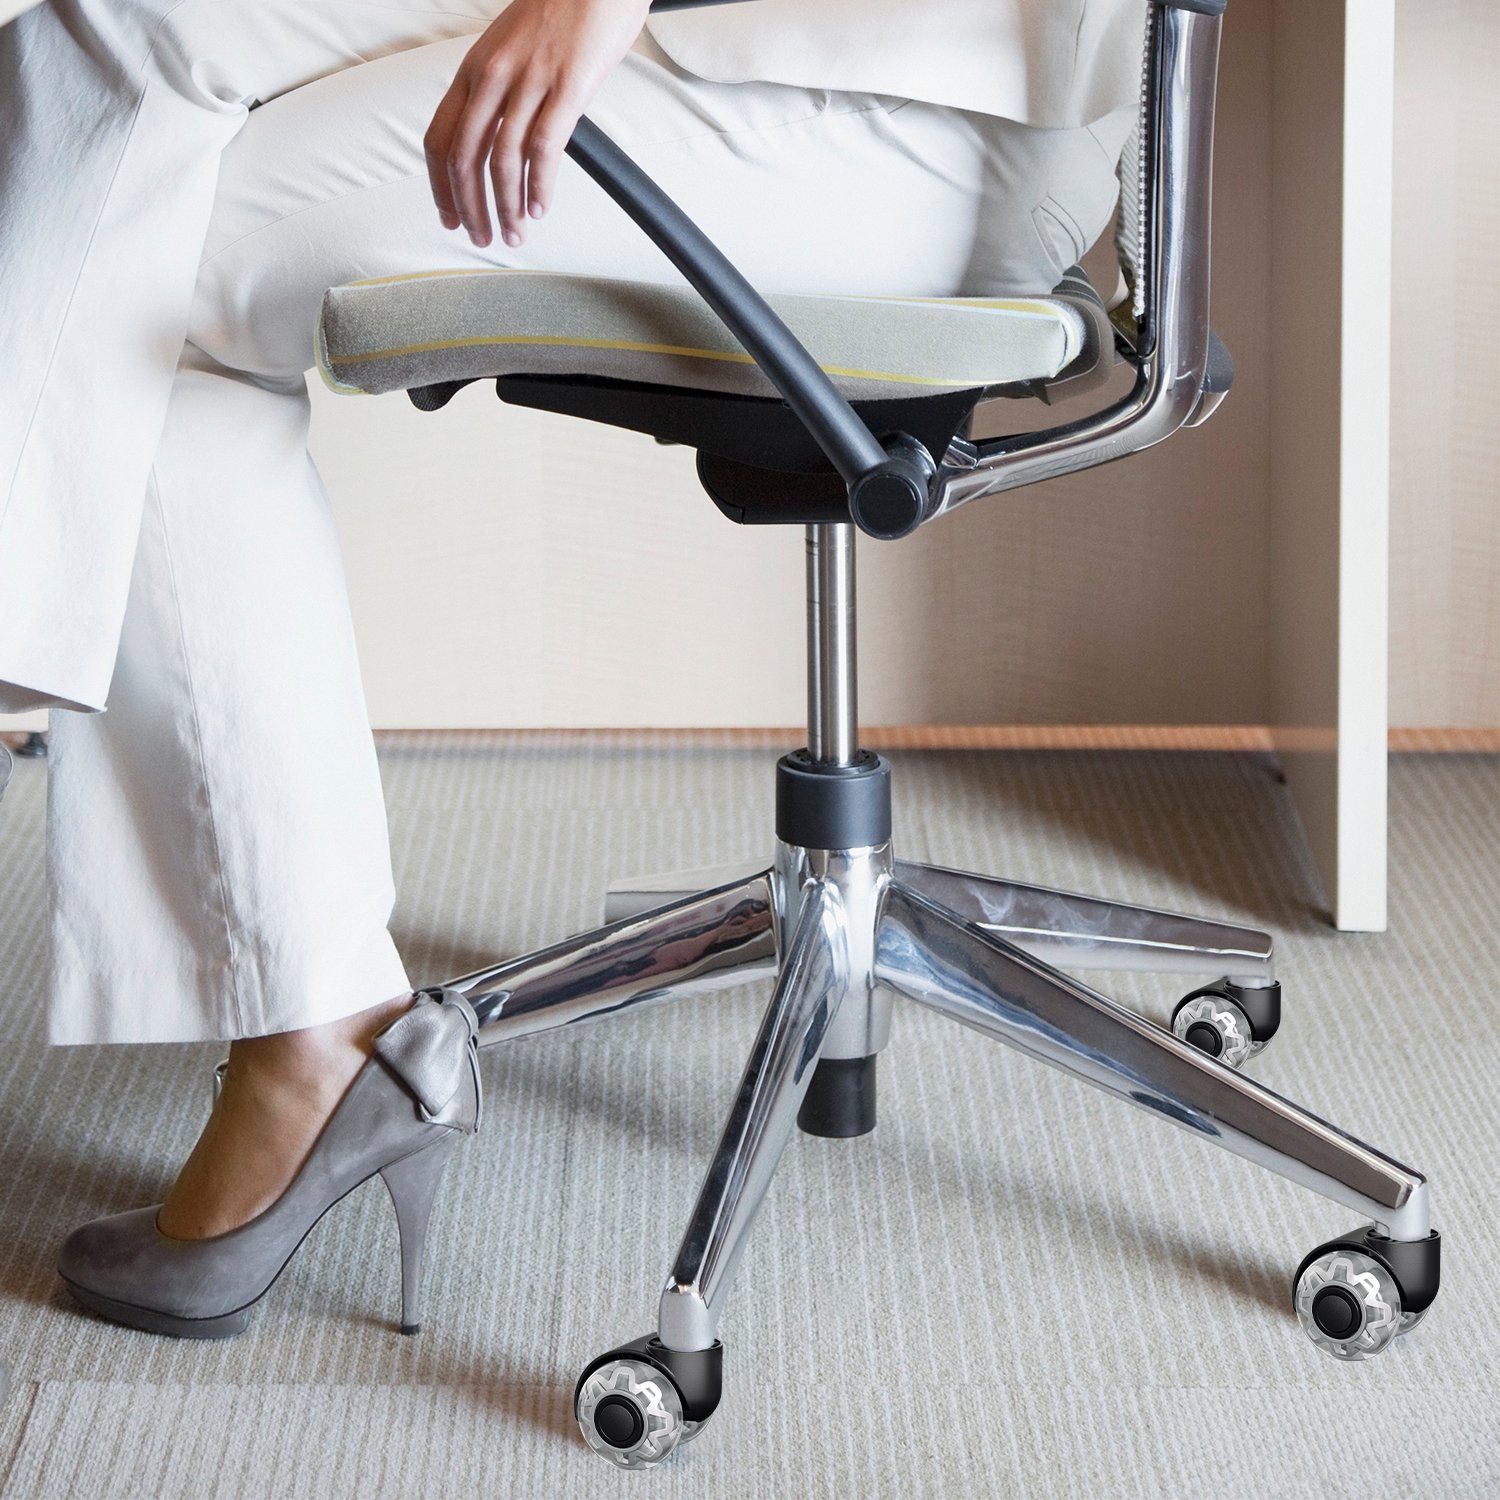 kratzerfrei, Clanmacy (5-St) Stuhlrolle Bürostuhlrollen Grad 11x22mm,360 leise Drehung böden 5